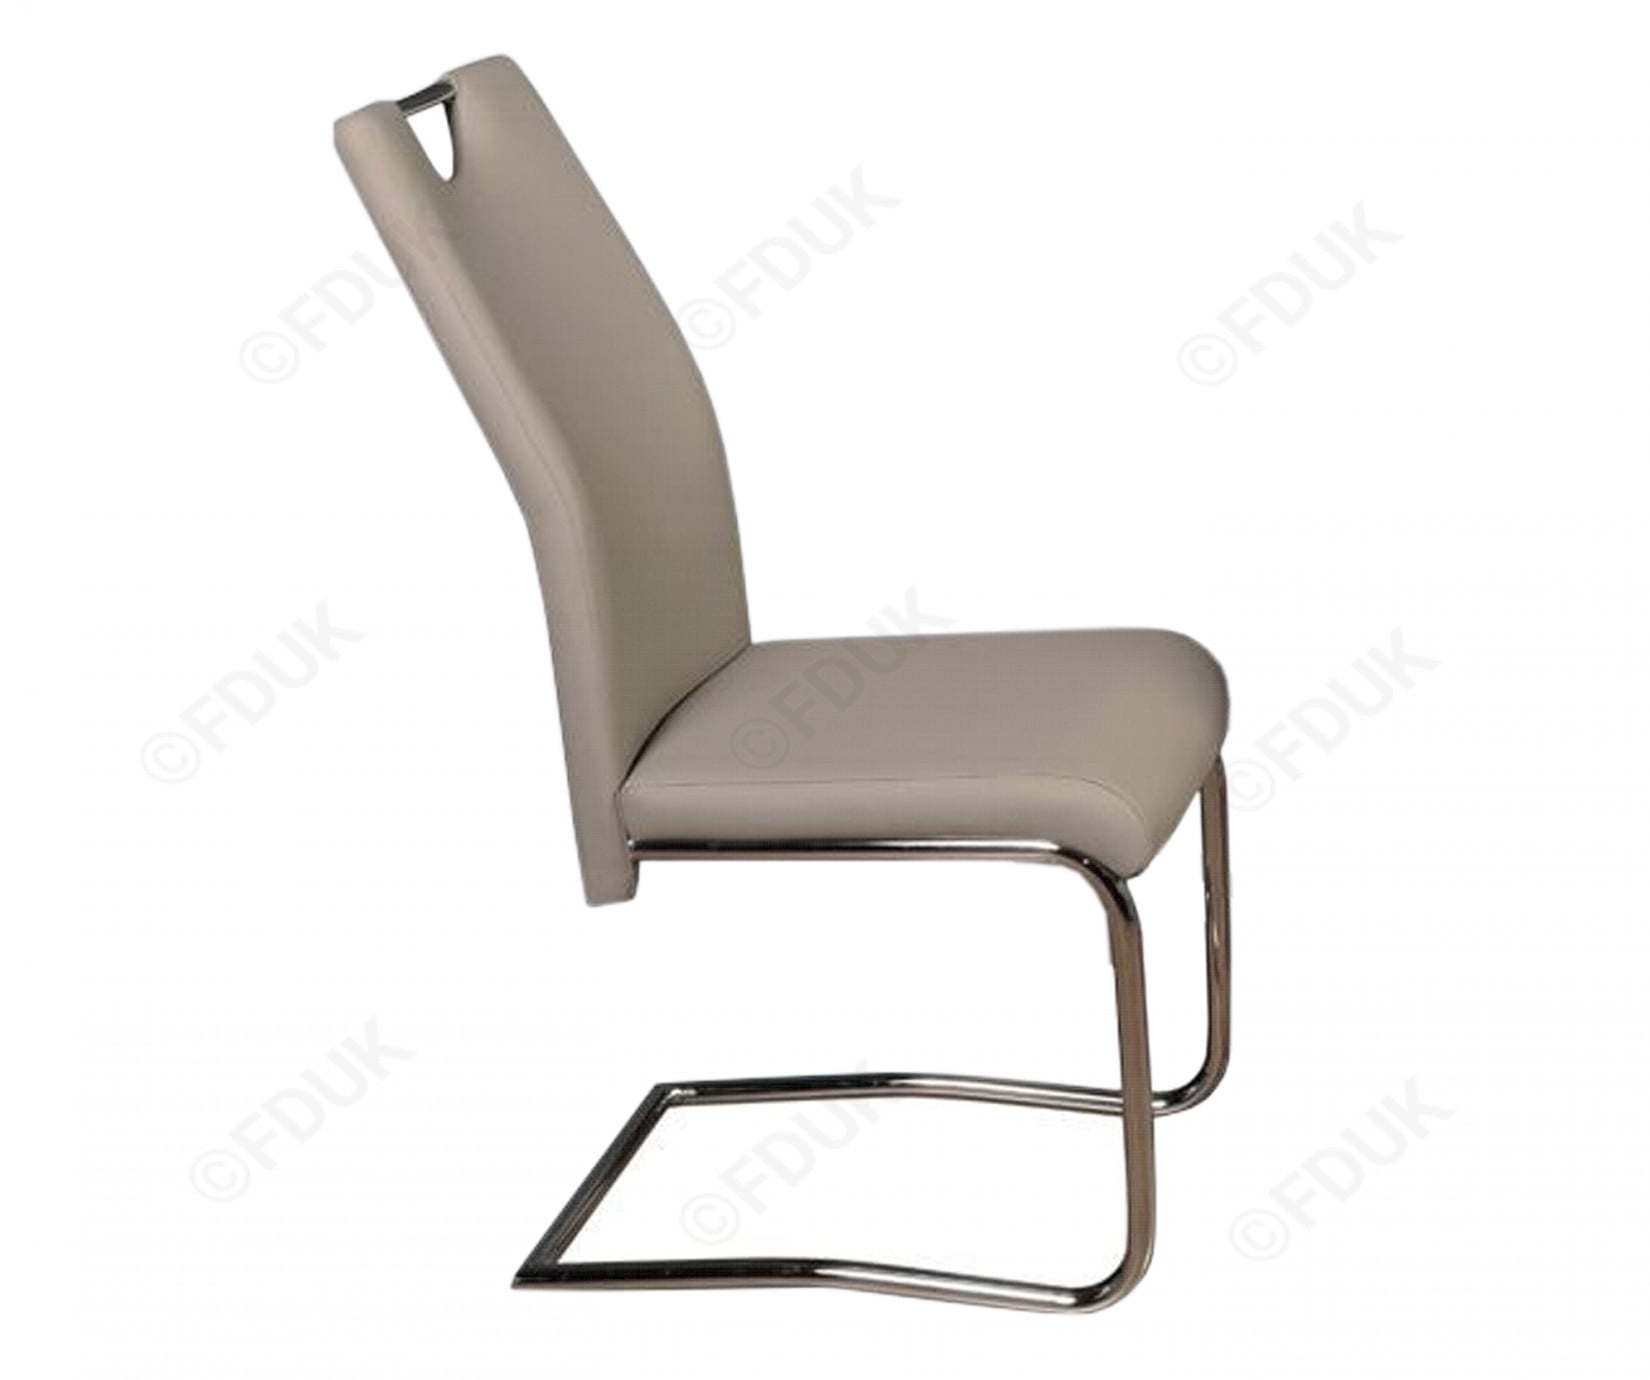 Claren dining chair